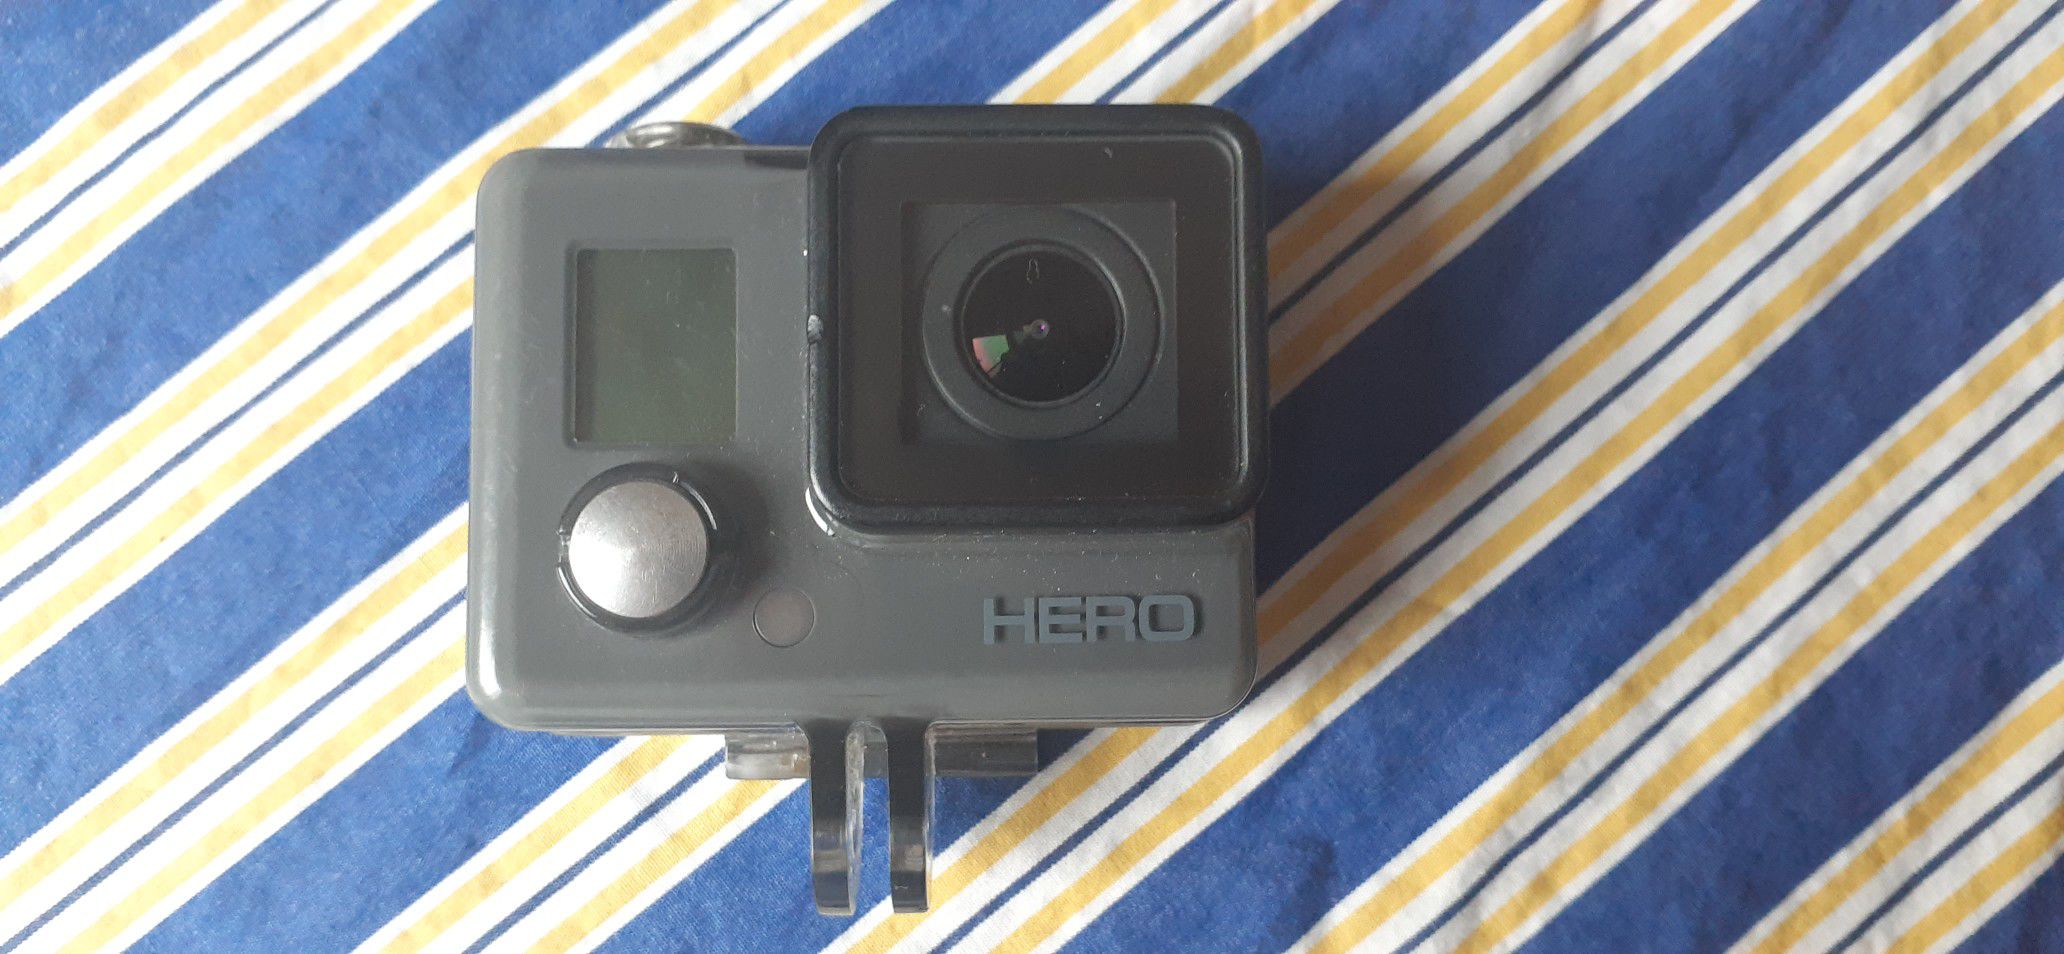 Go Pro Hero HD Camera with Handle